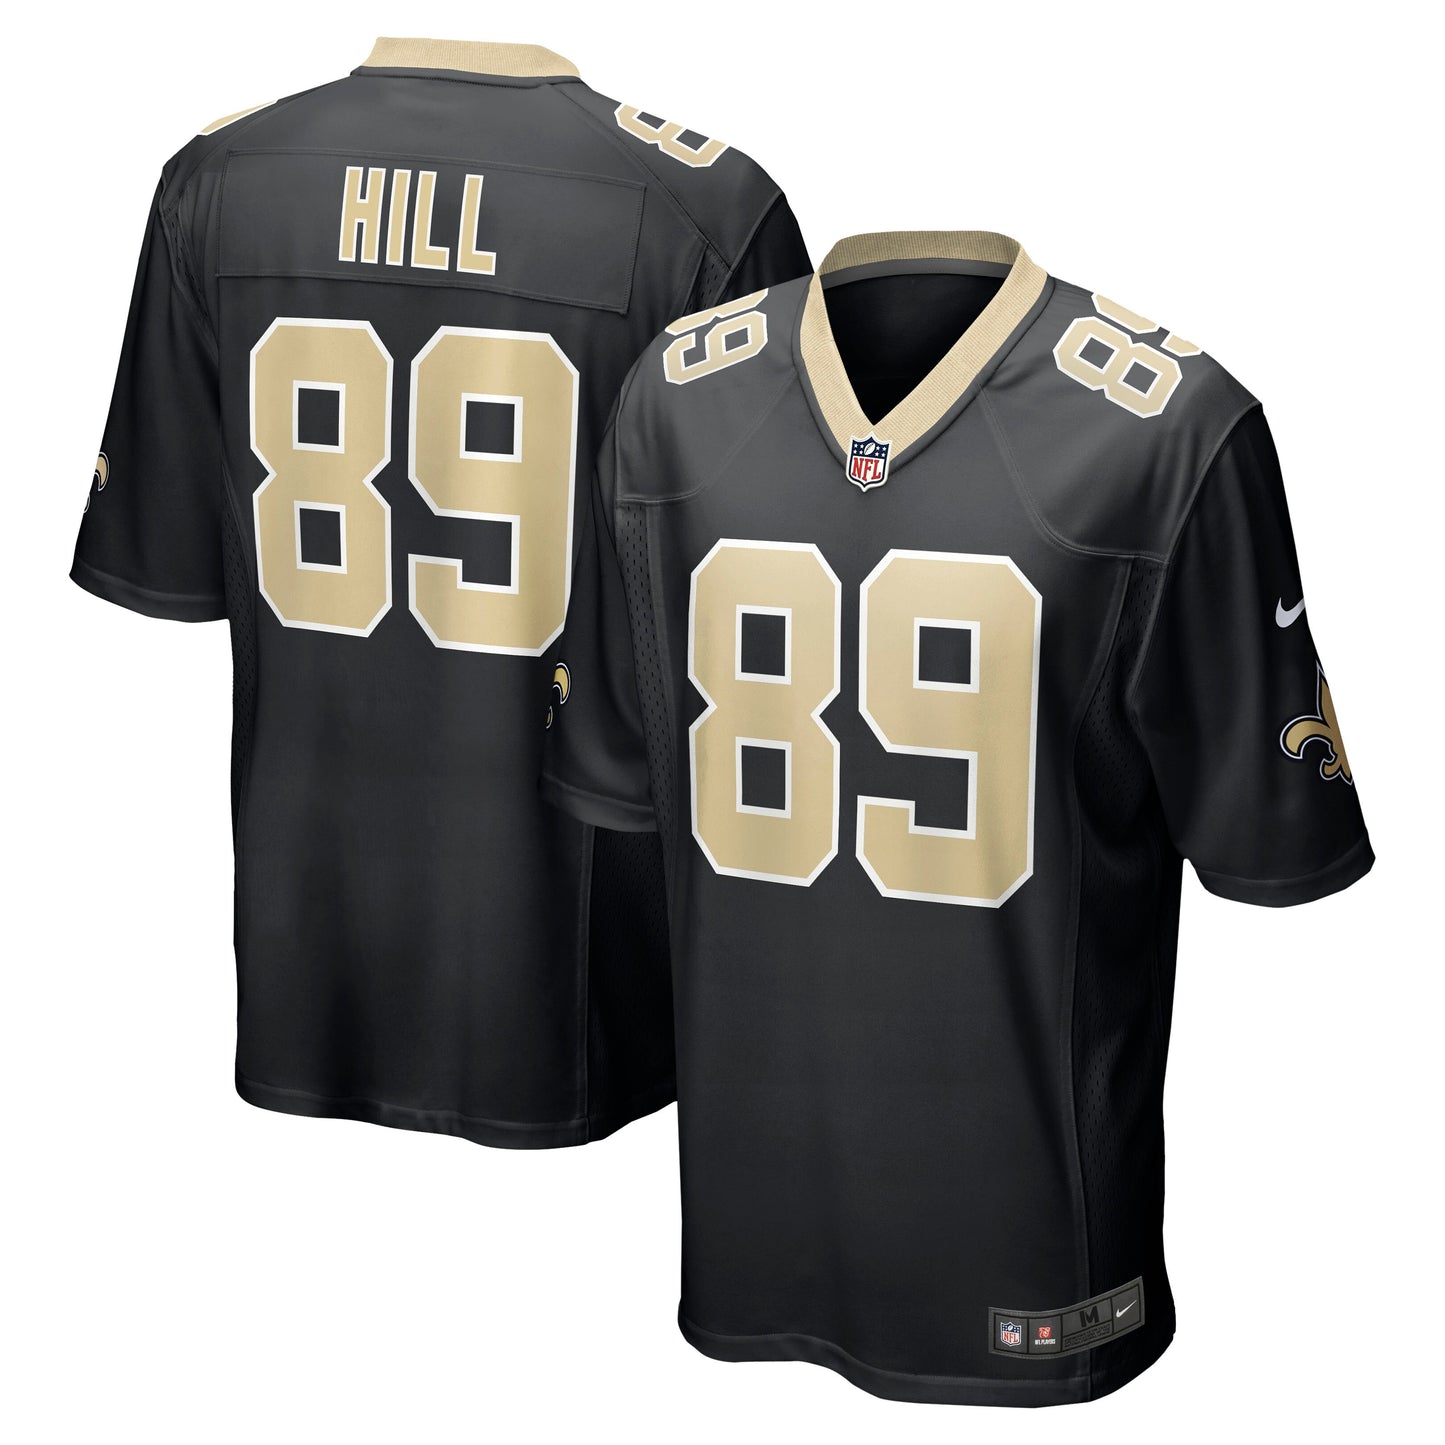 Josh Hill New Orleans Saints Nike Game Jersey - Black